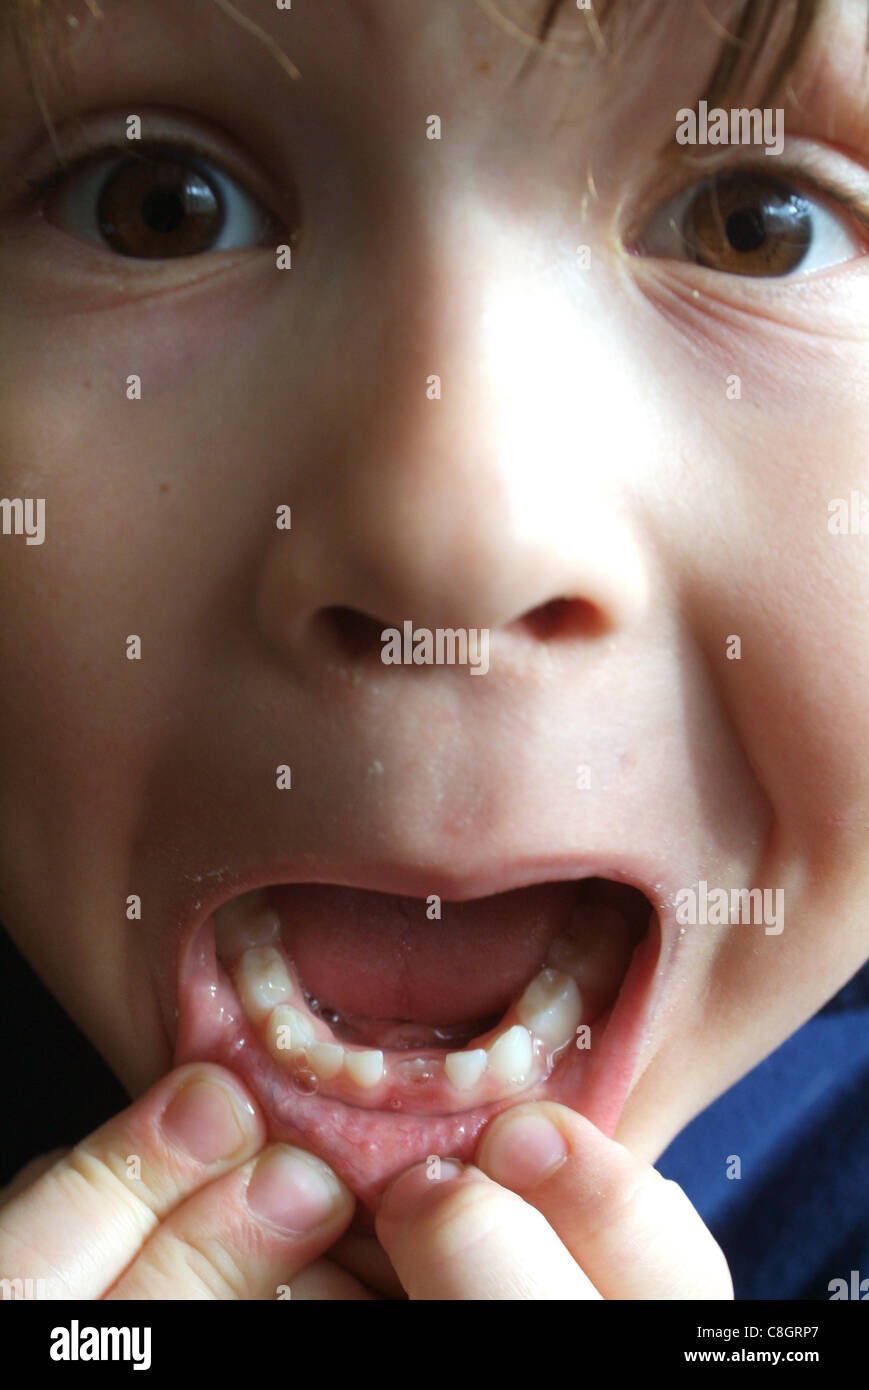 Bambino, ragazzo, denti milkteeth, dentale gap, nuovamente, dente Foto Stock